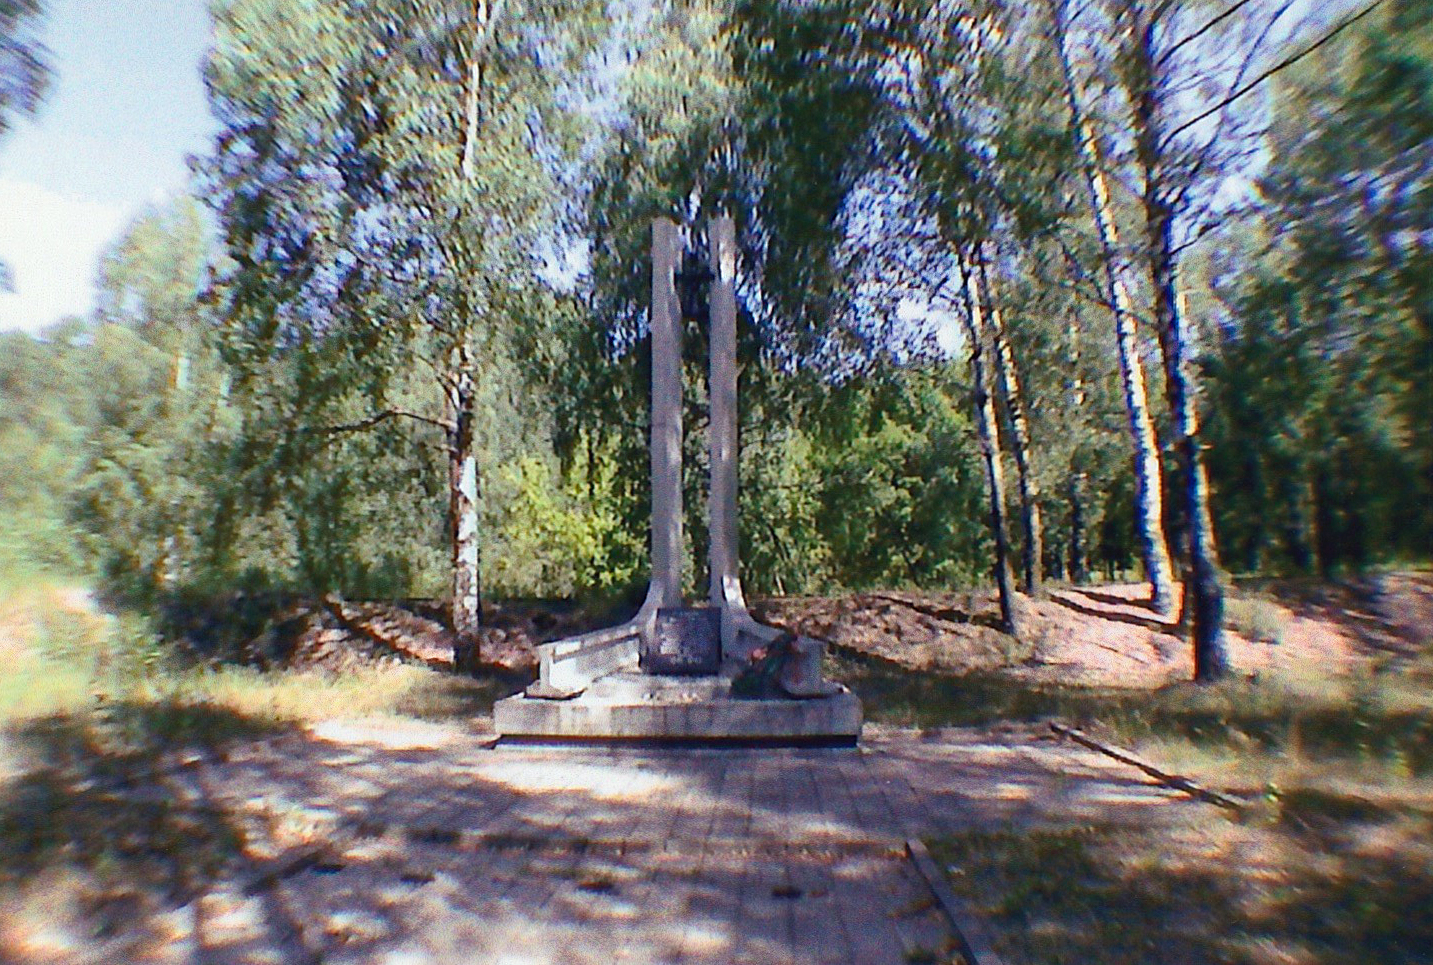 Brona-Gora Memorial where Jews from Drogicin were
                taken to be murdered